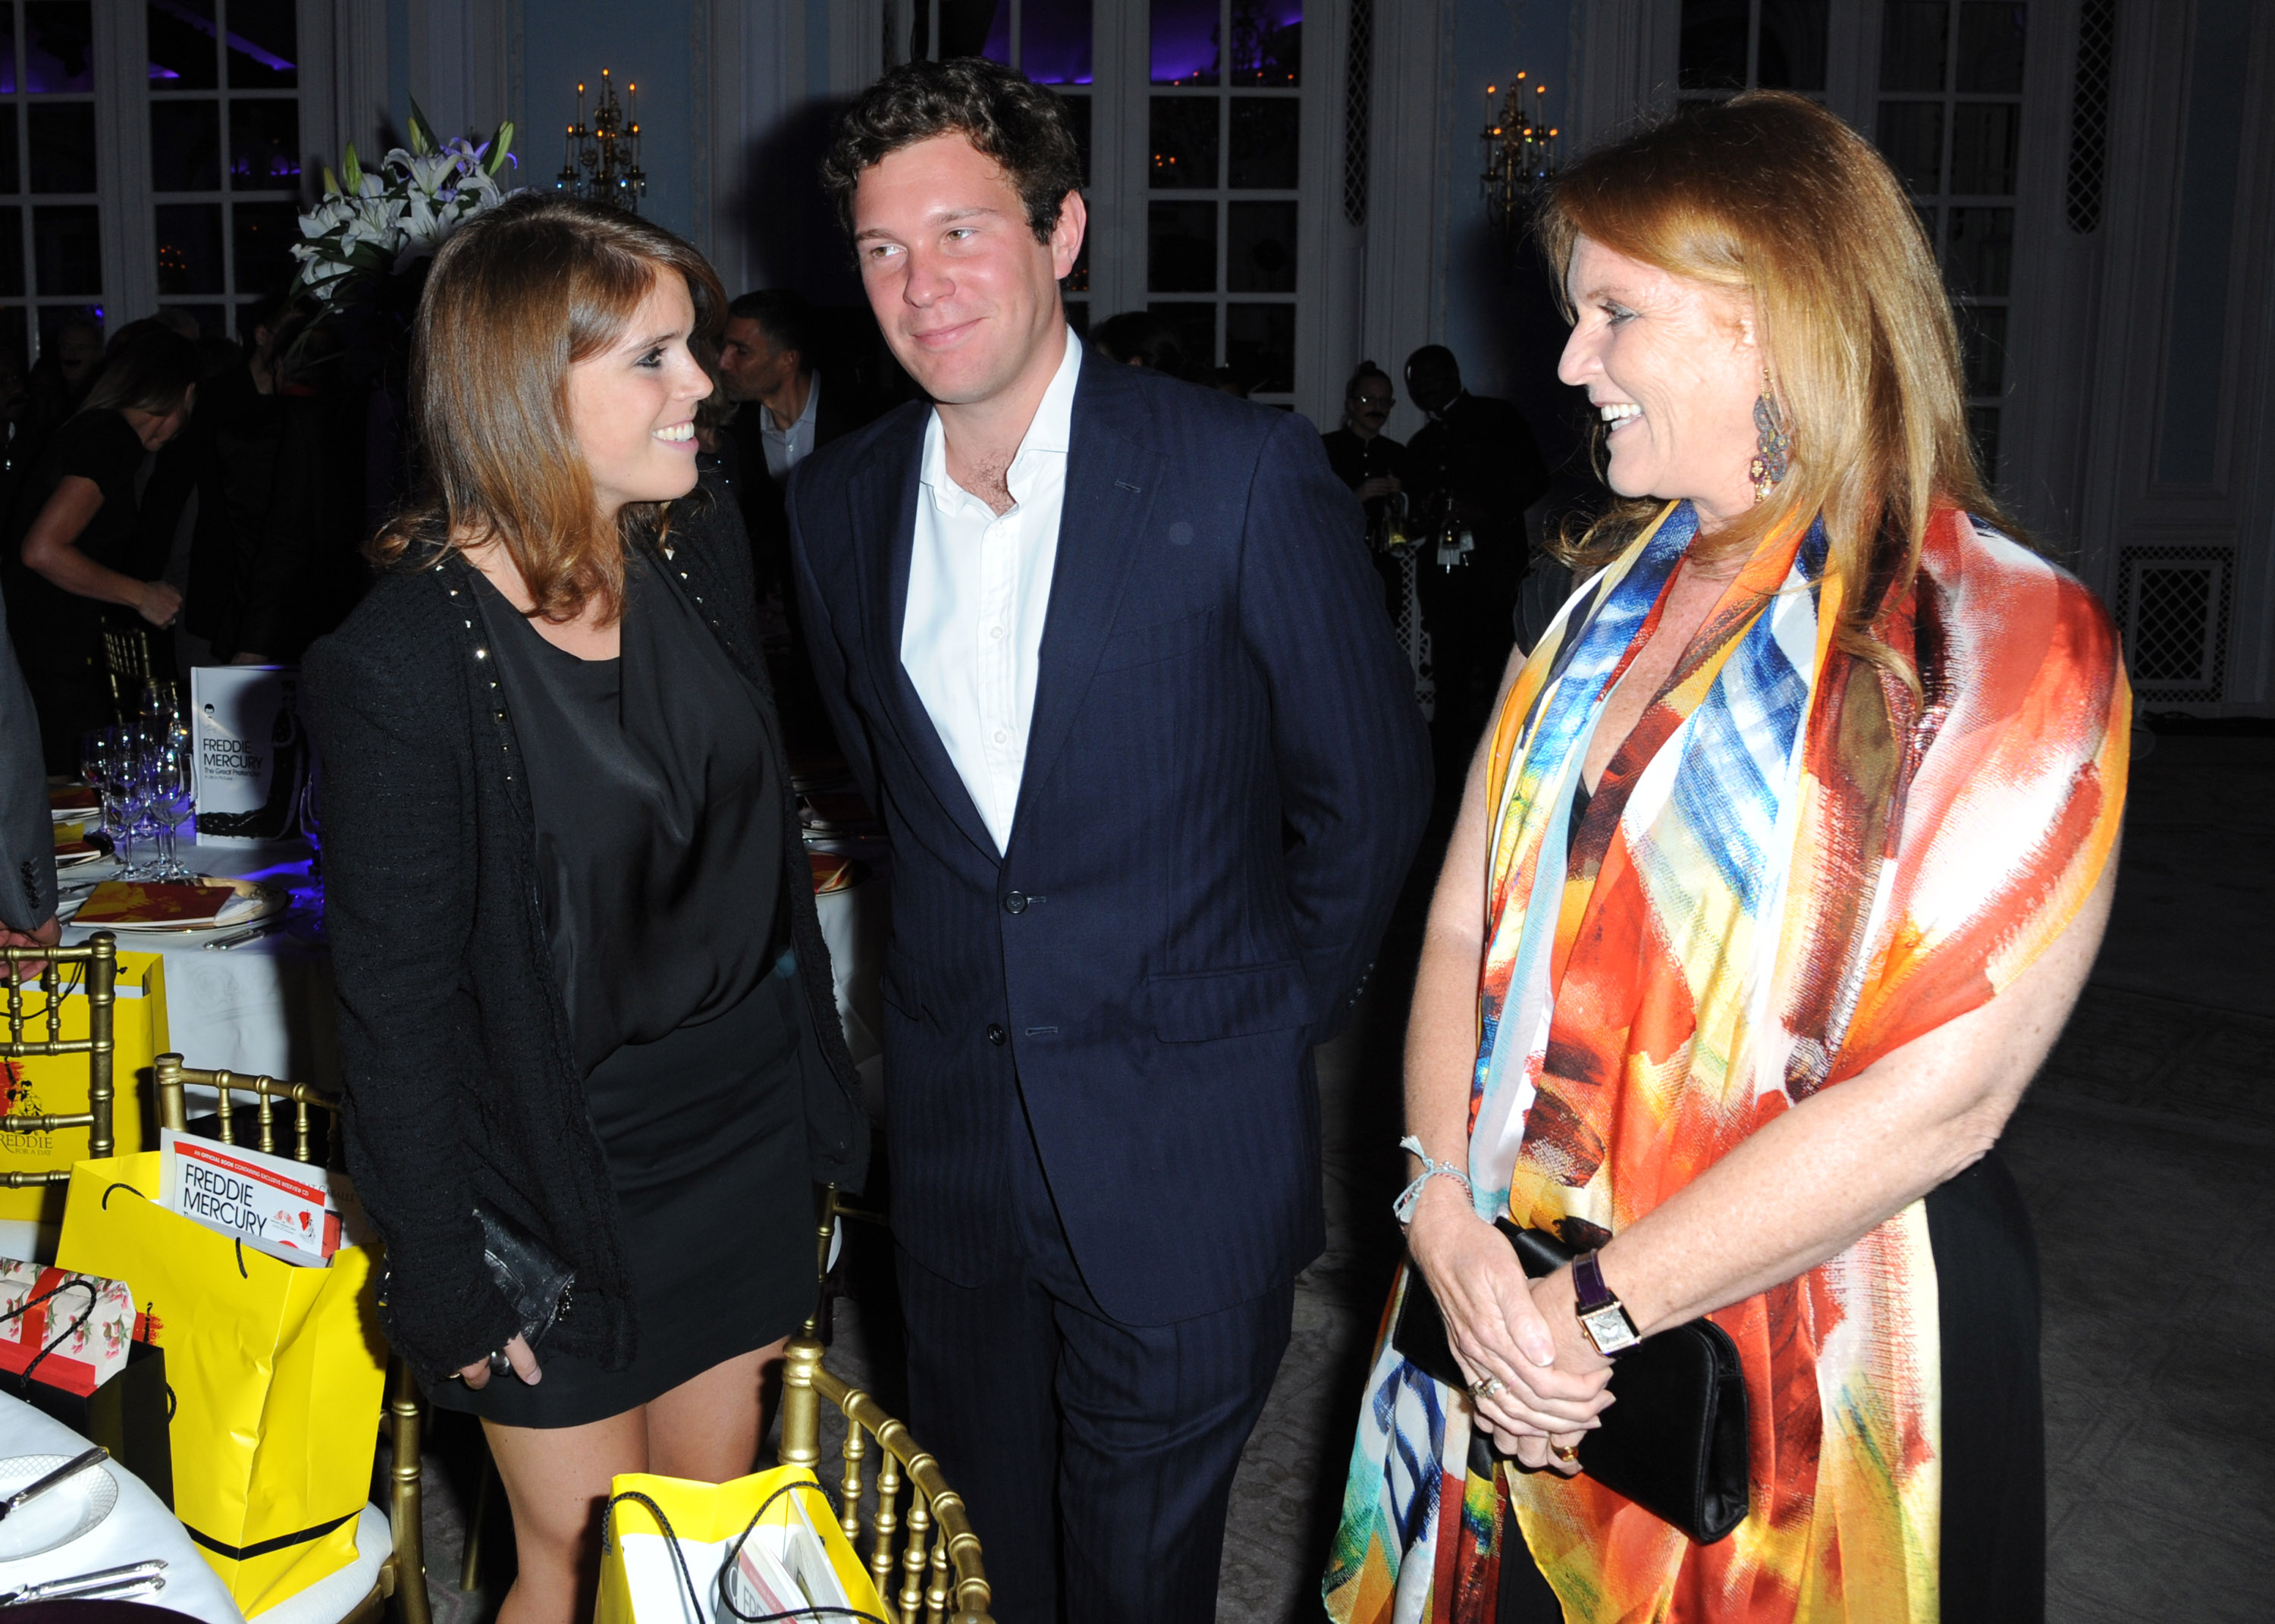 Sarah Ferguson, Jack Brooksbank, and Princess Eugenie standing together at a reception